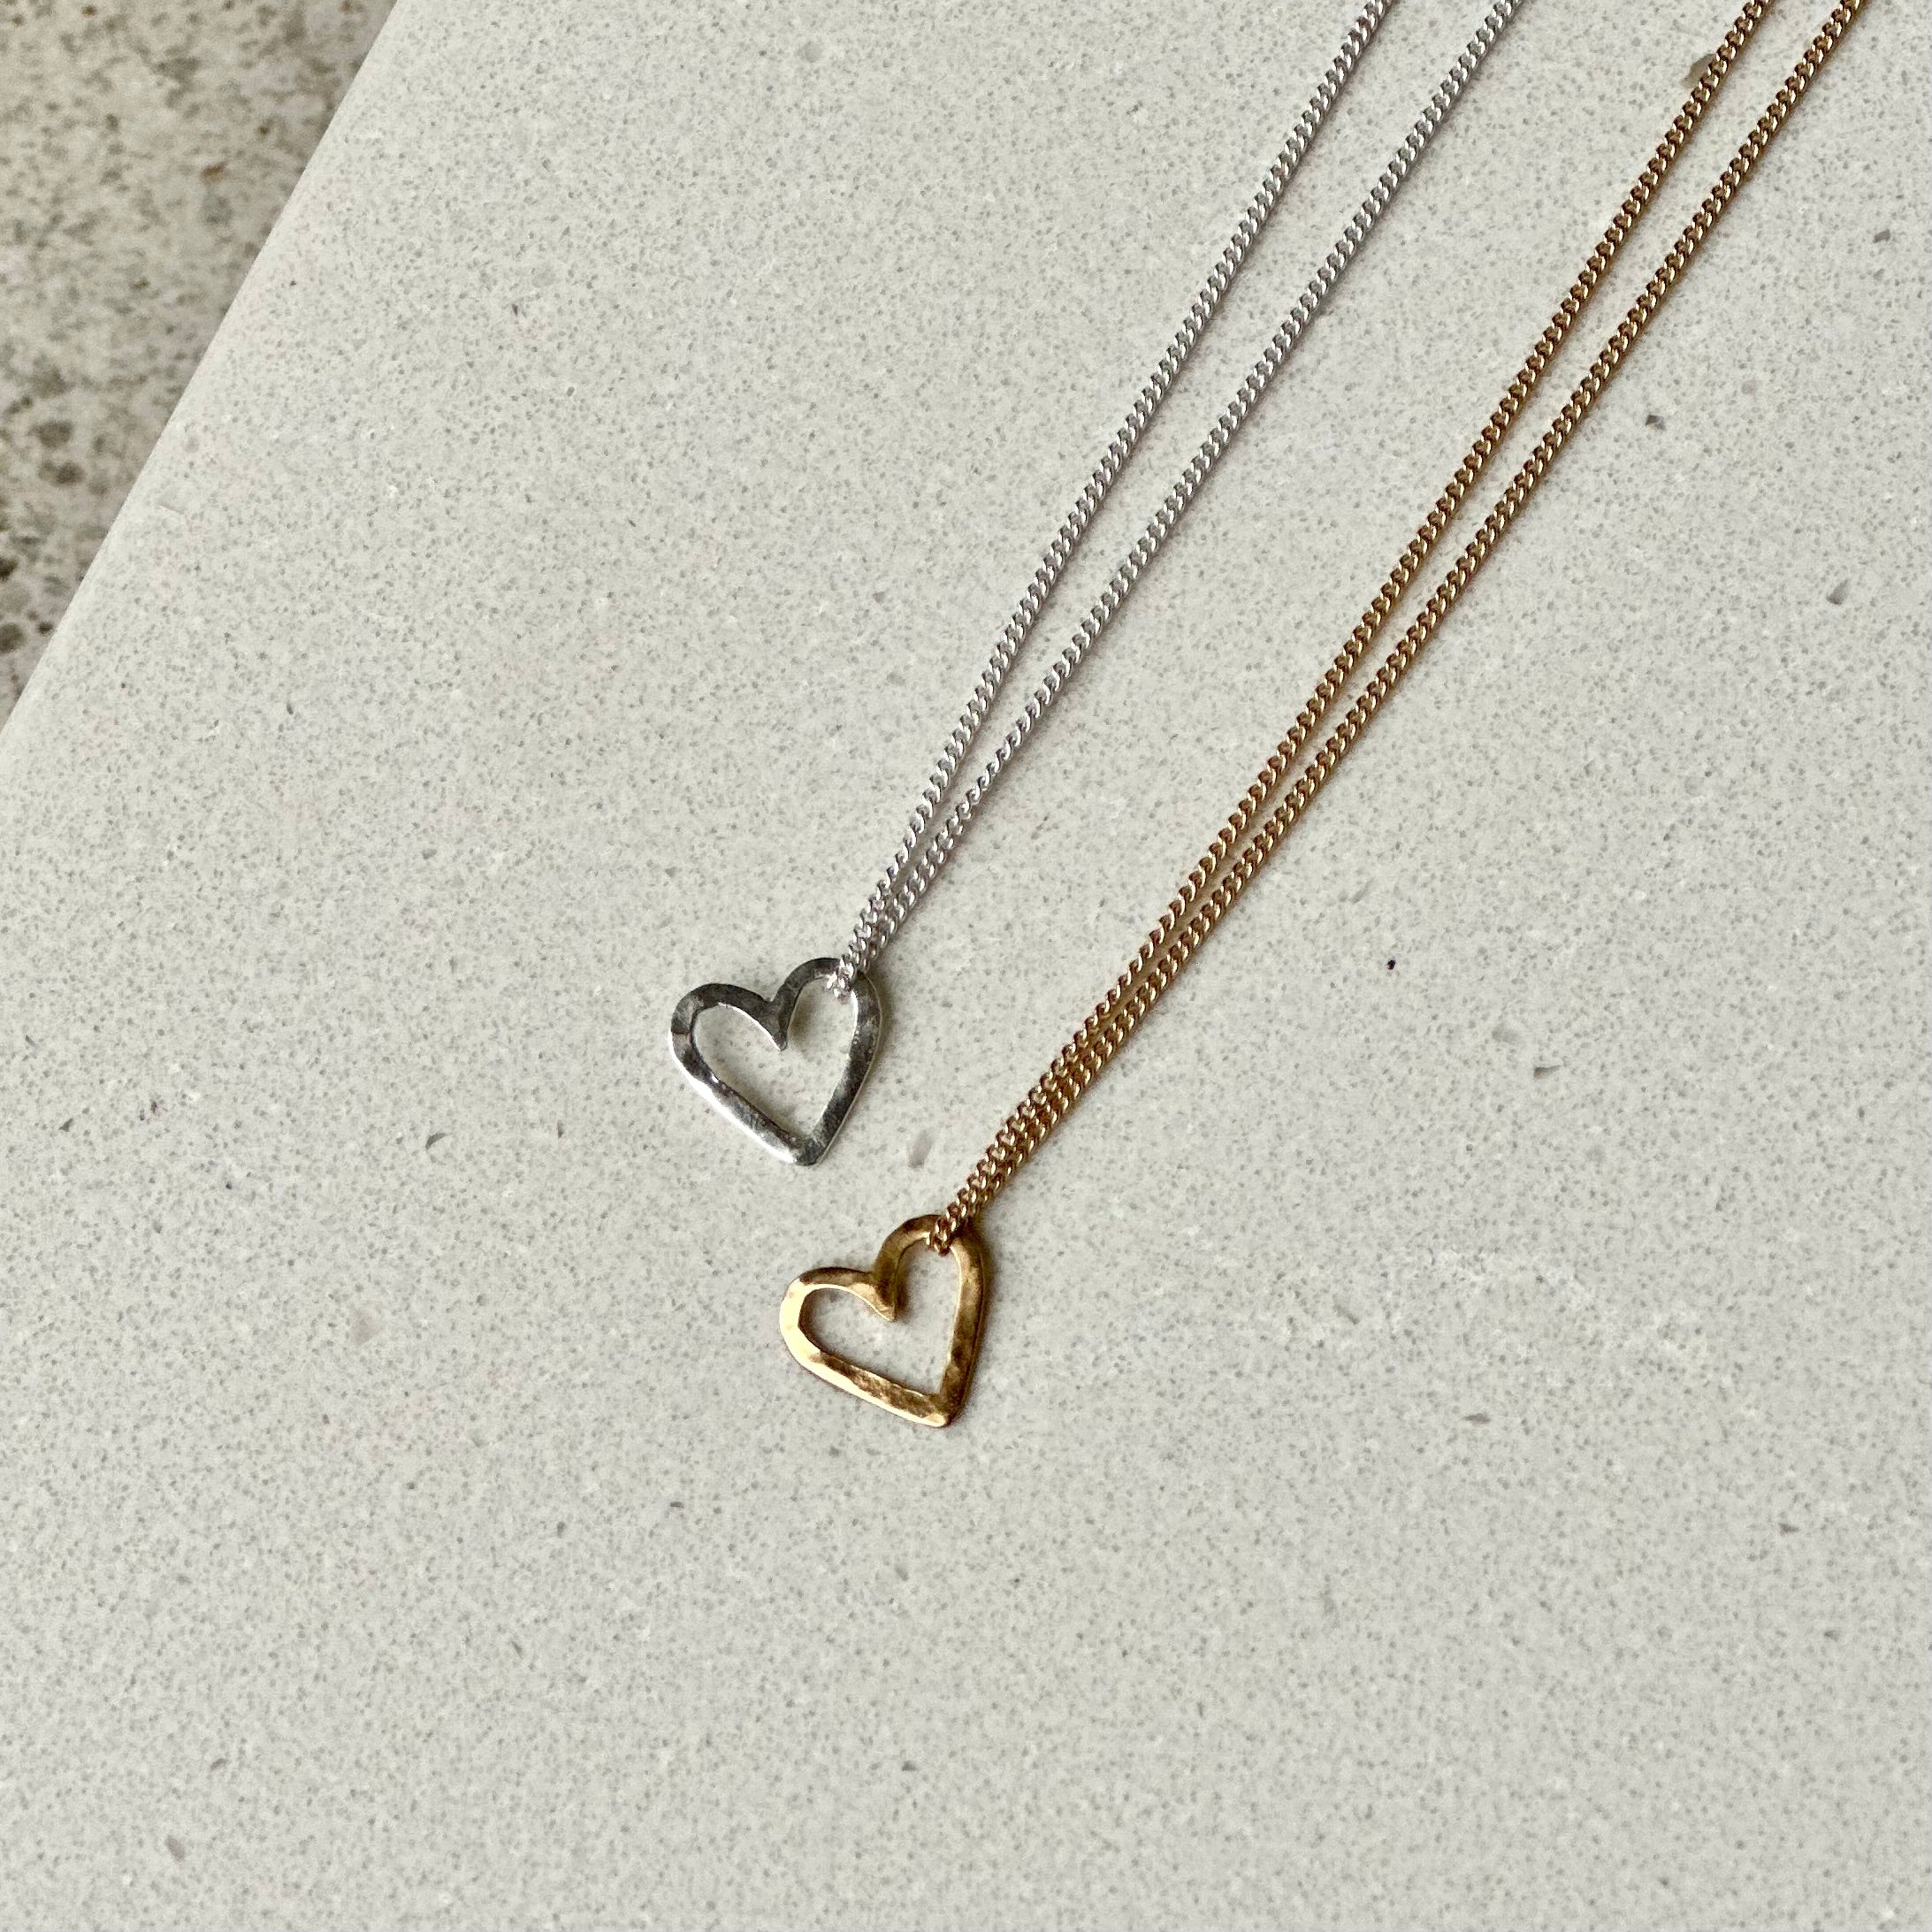 Tiny heart shape pendant